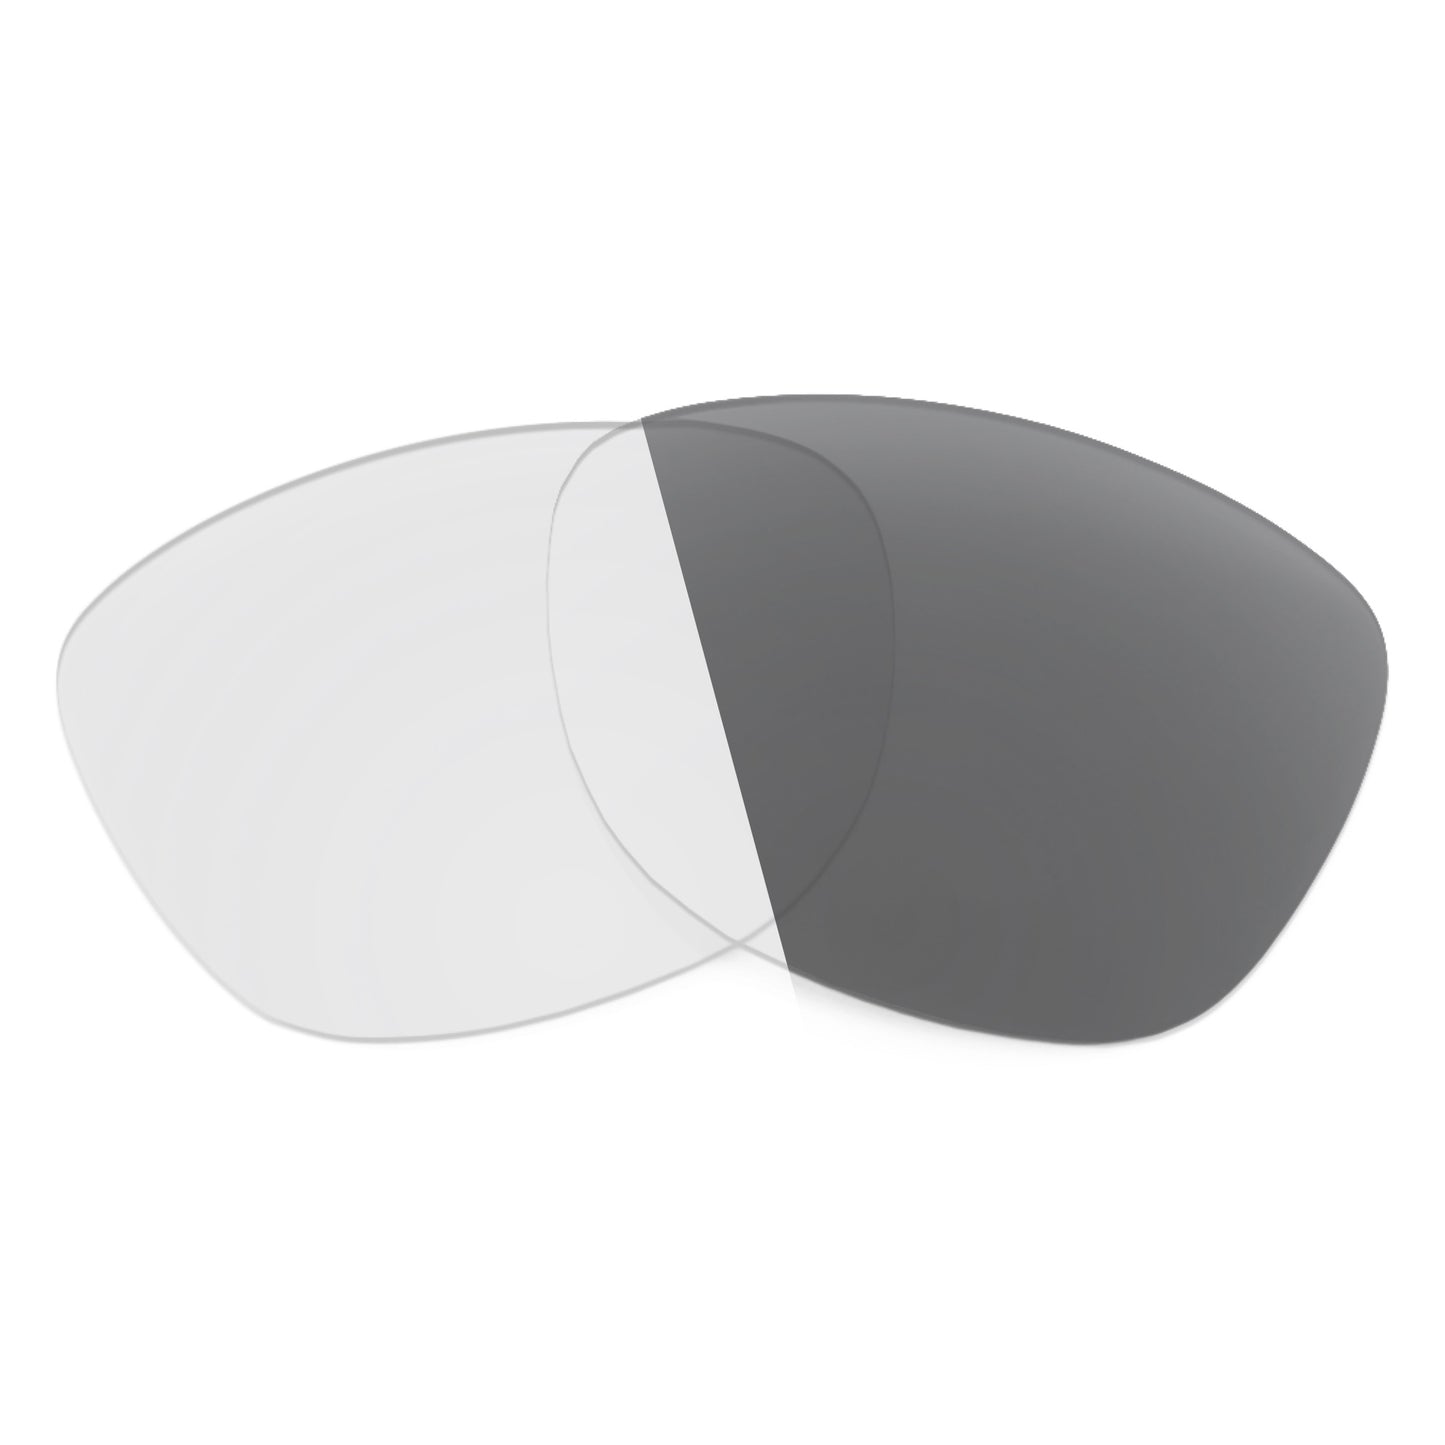 Revant replacement lenses for Maui Jim Glory Glory MJ833 Non-Polarized Adapt Gray Photochromic